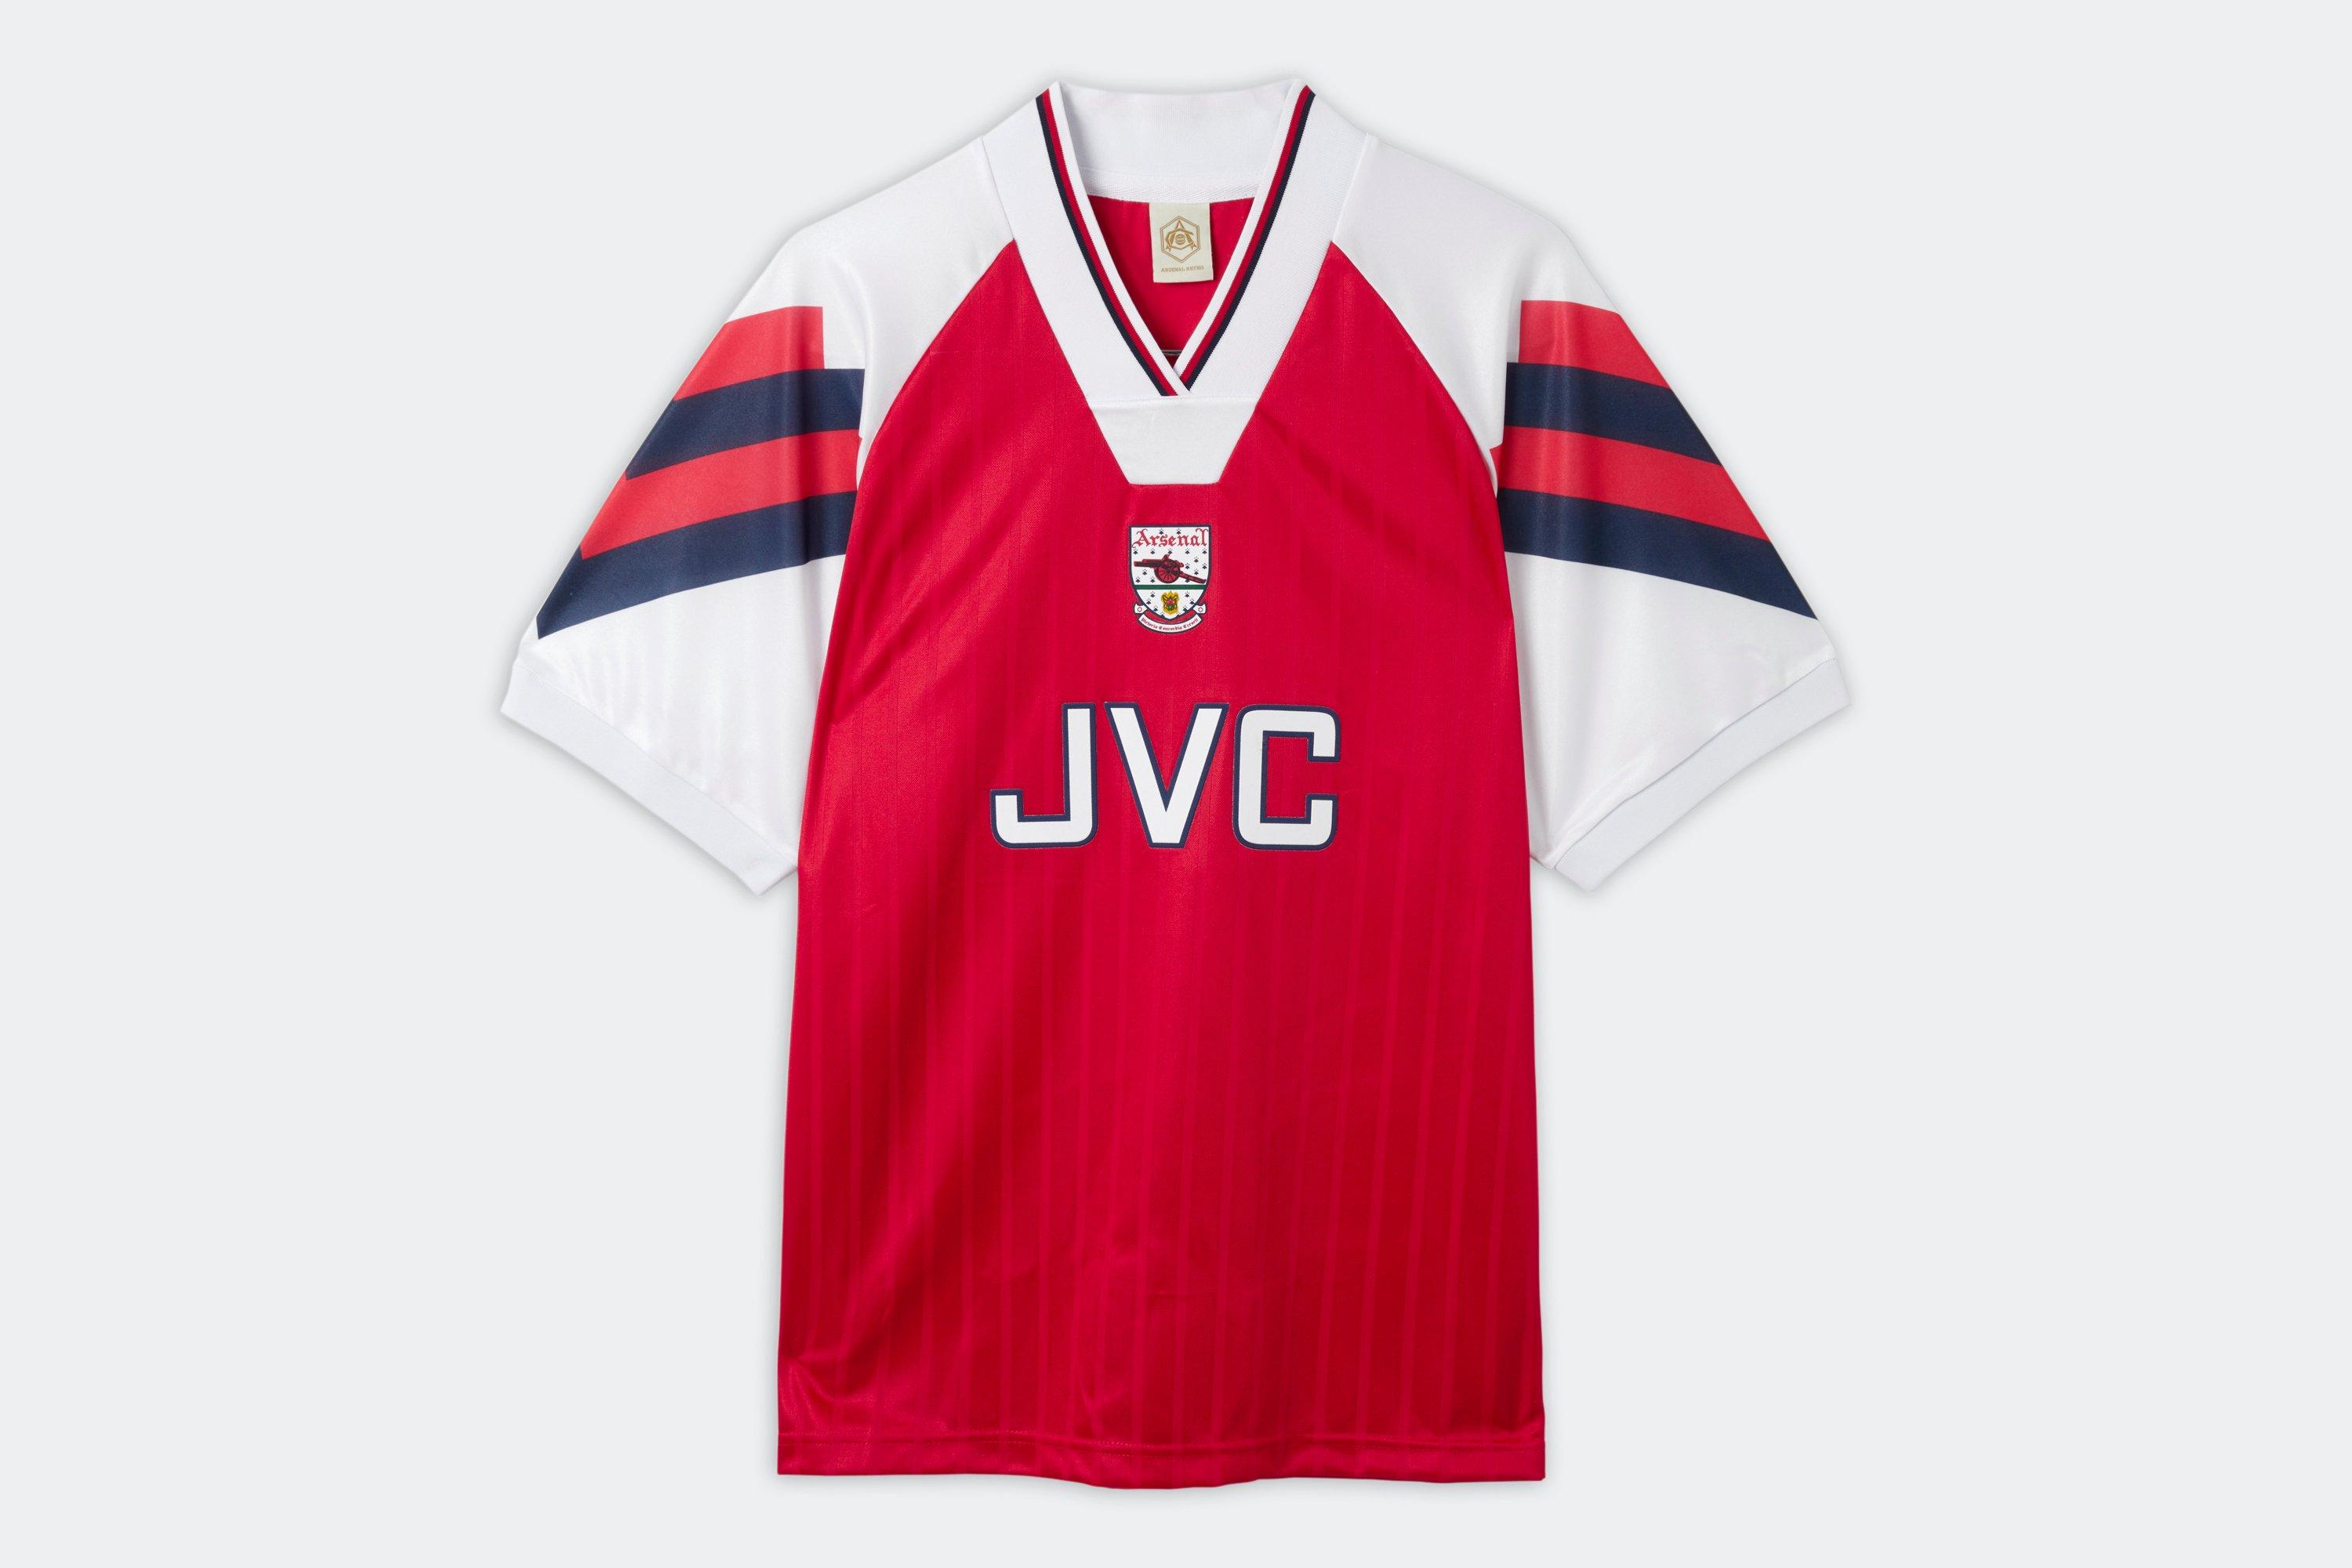 90-92 Arsenal FC retro kits